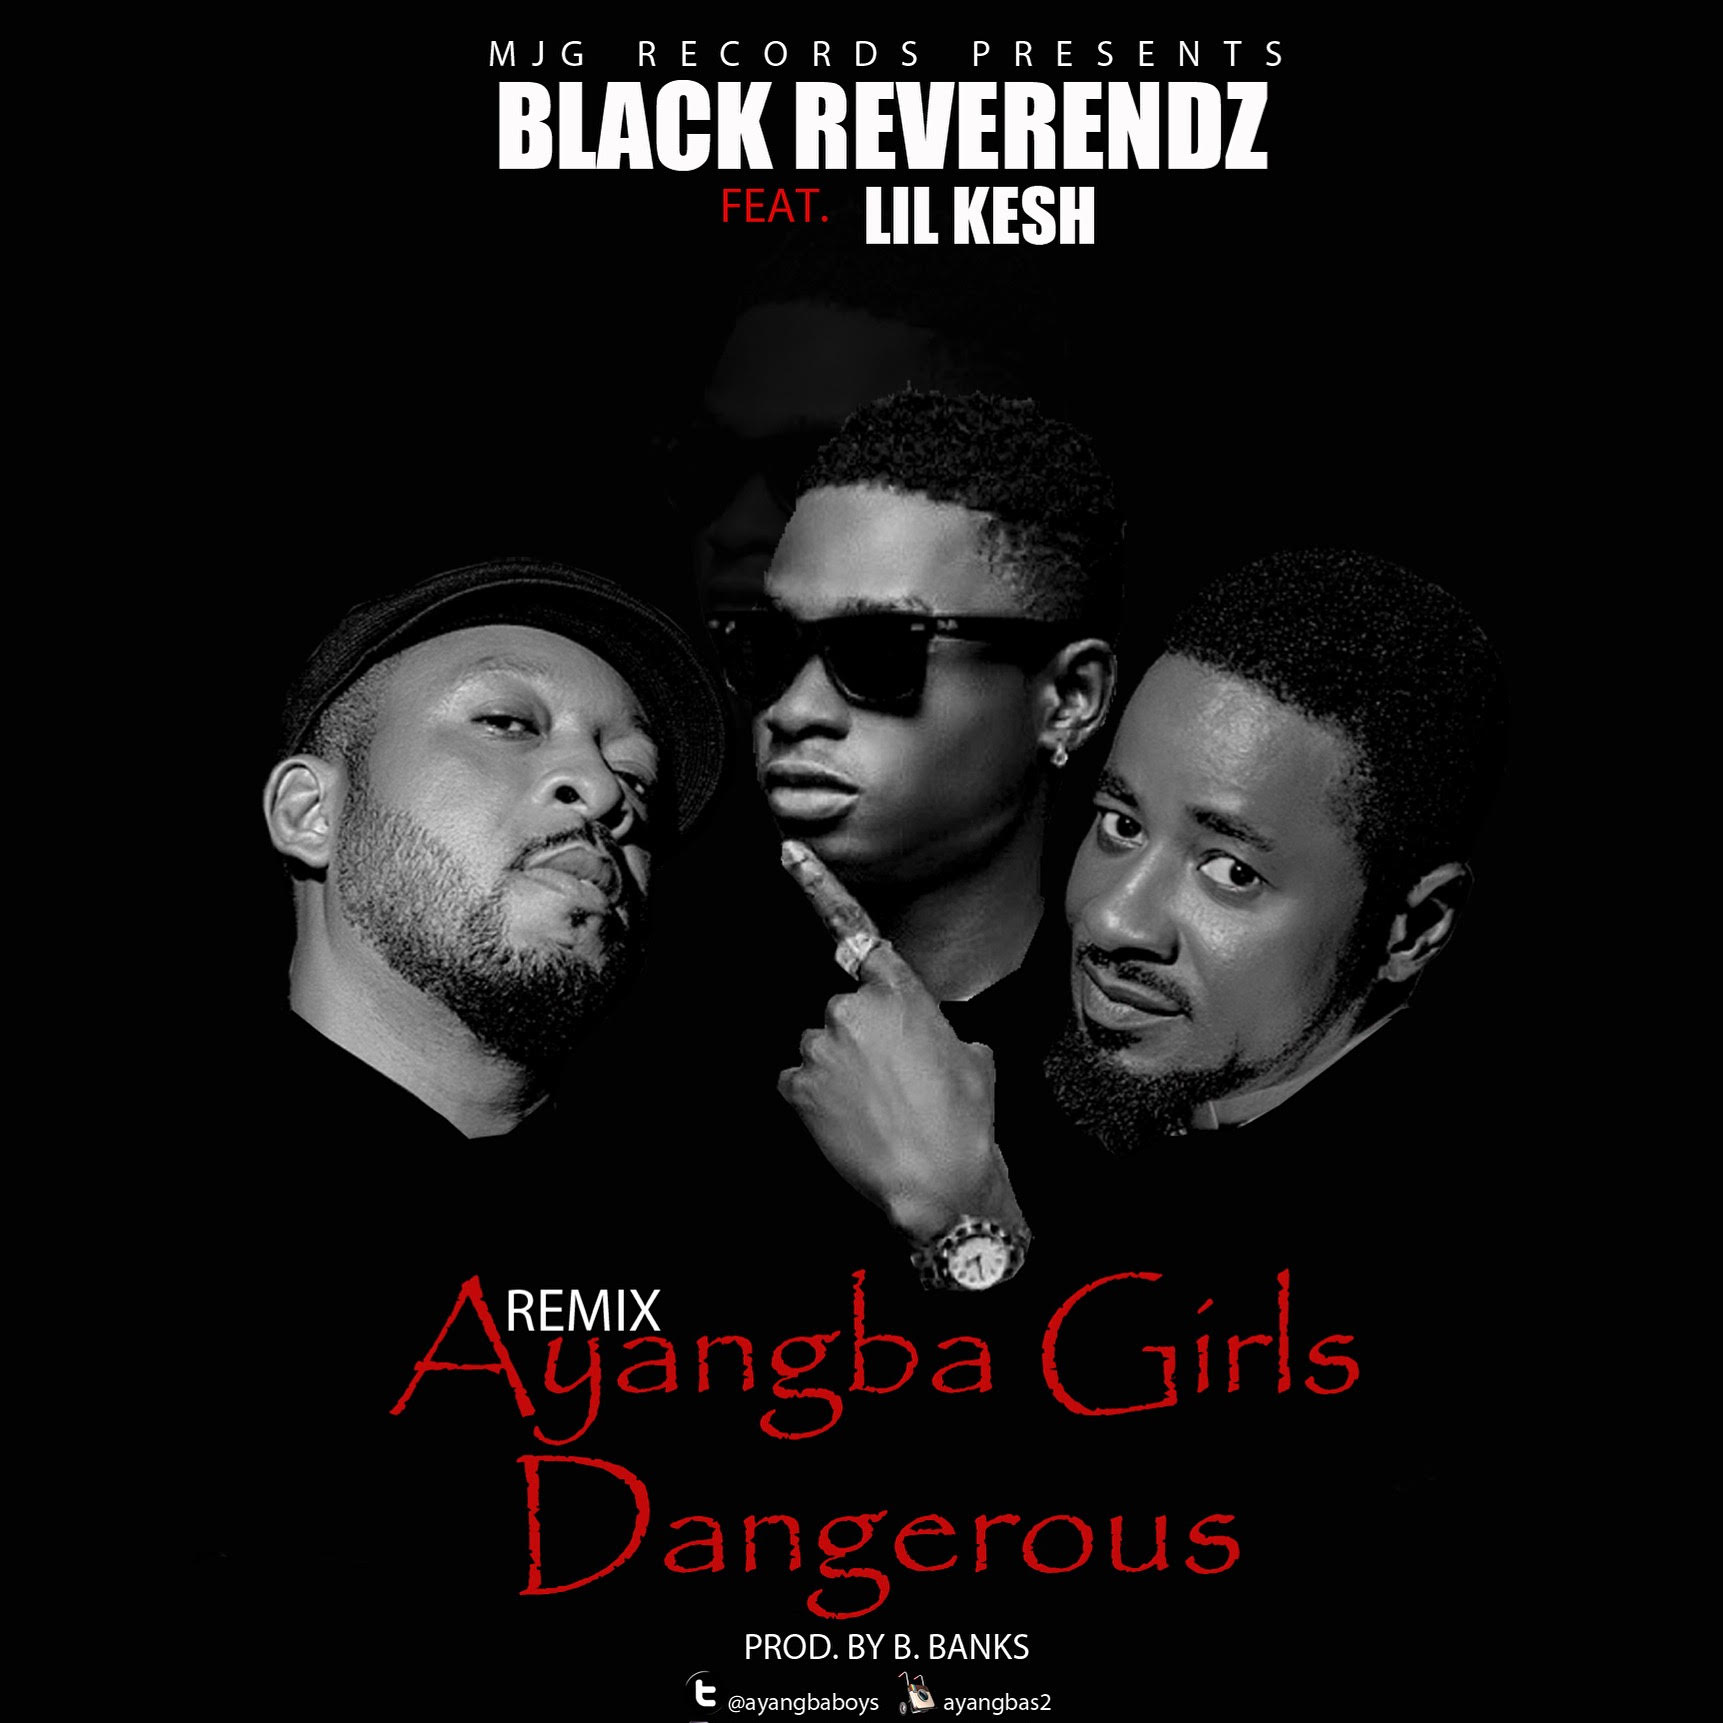 VIDEO: Black Reverendz ft. Lil Kesh - Ayangba Girls Dangerous (Remix)